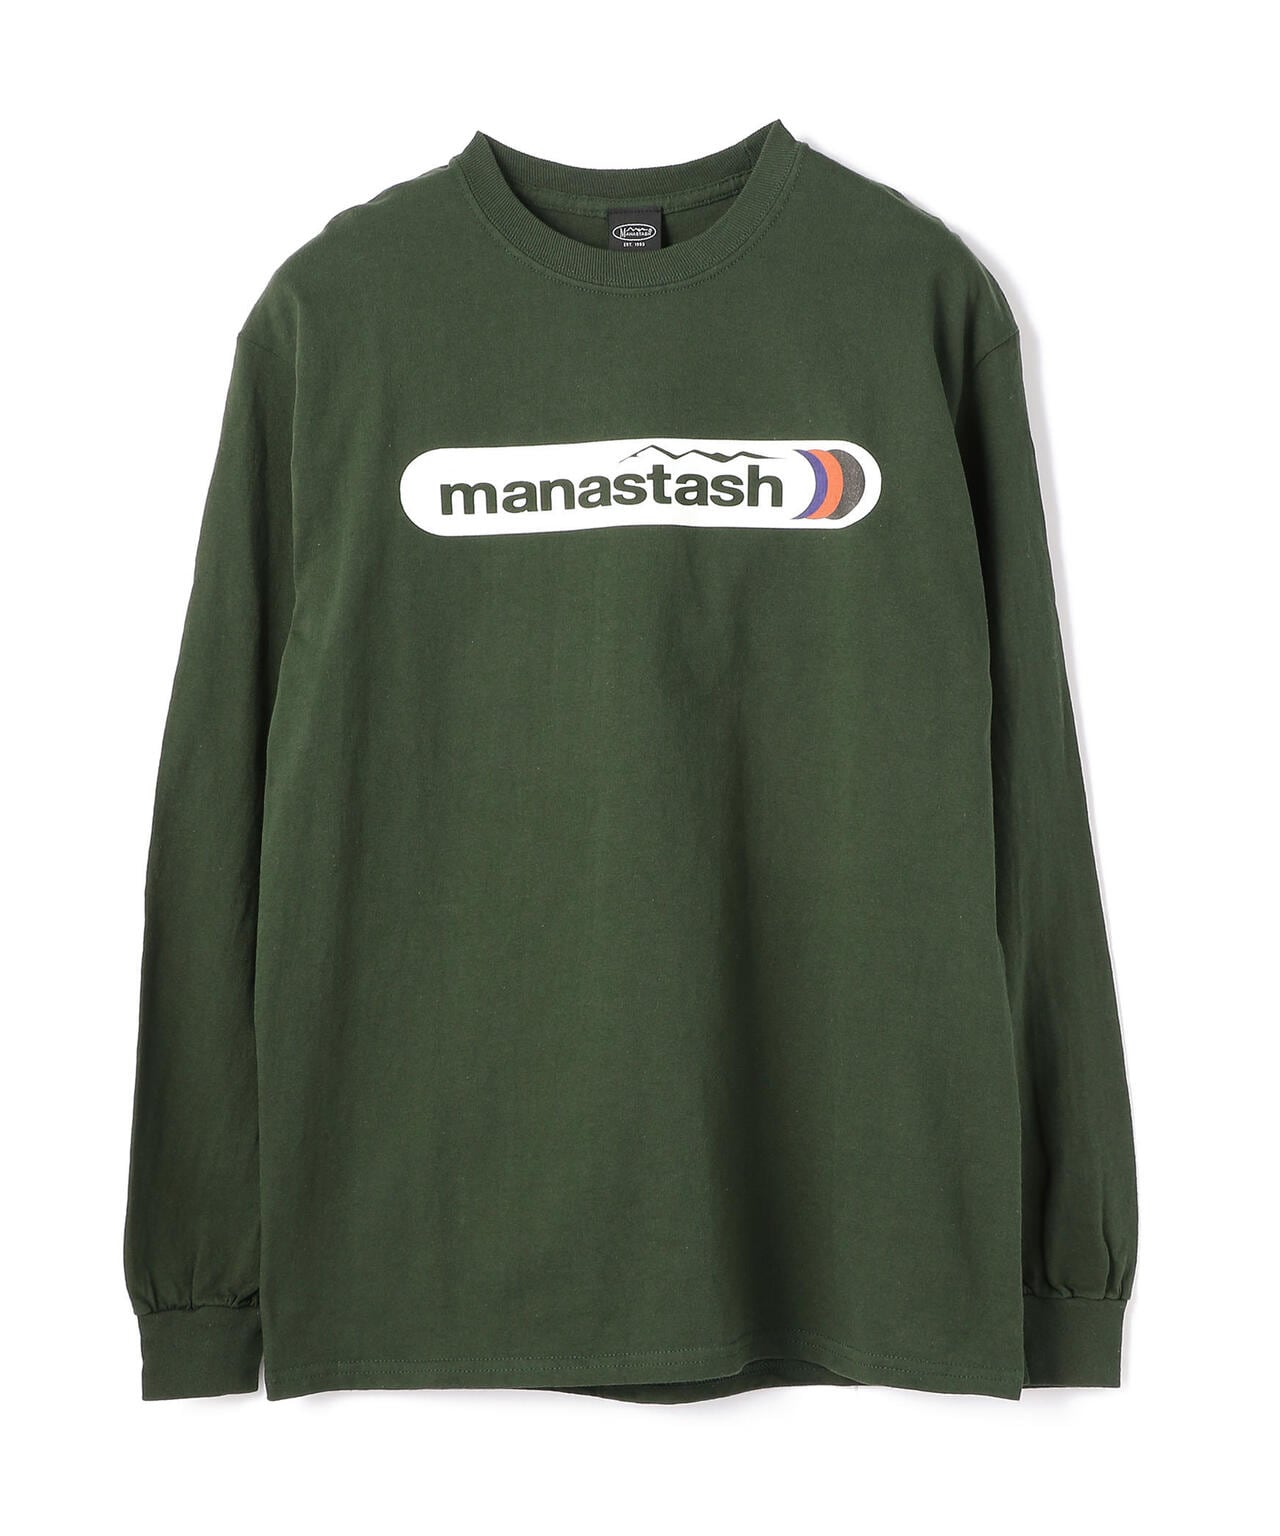 MANASTASH/マナスタッシュ/RaveLogo L/S T-Shirts/ロゴプリントロングスリーブTシャツ